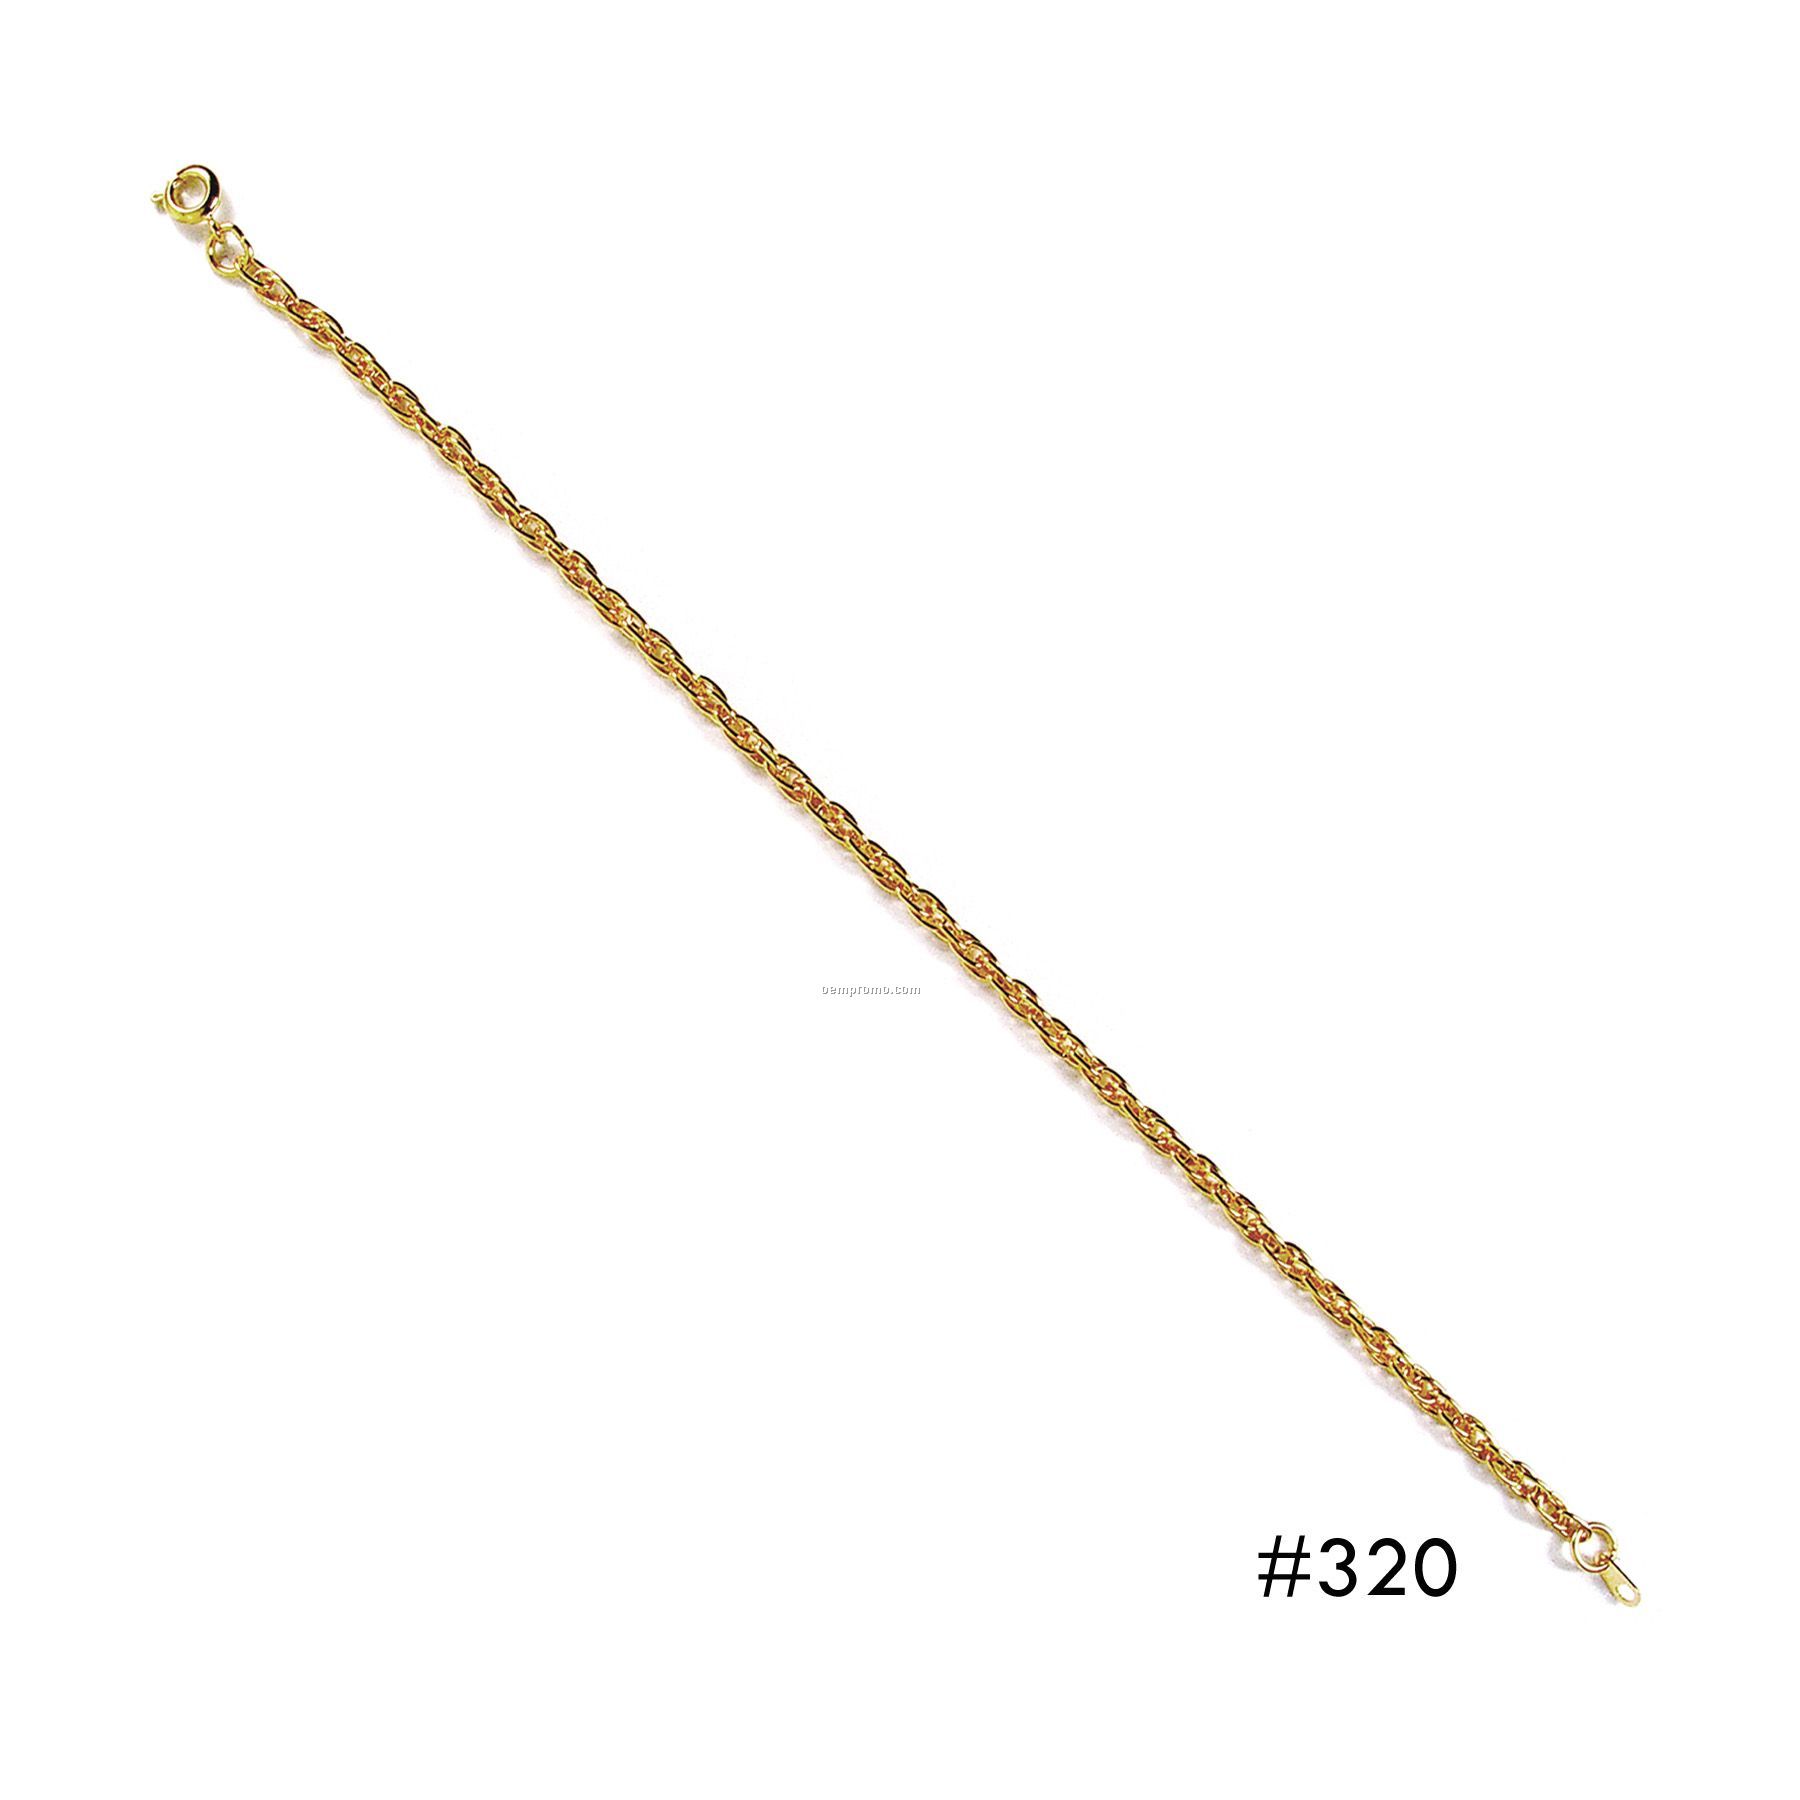 Gold Charm Bracelet - Small Link